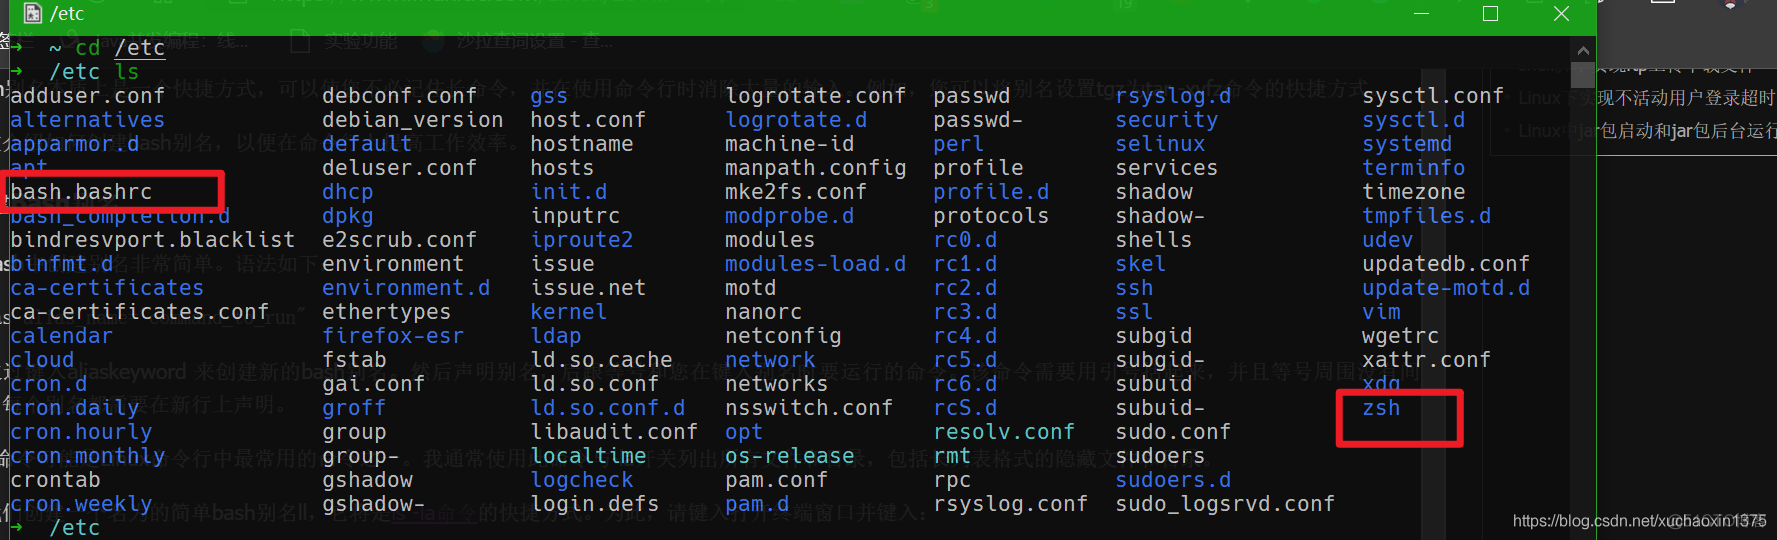 linux获取完整的man(manpages)linux参考手册/中文man的下载和使用/获取buildin 命令的完整帮助文档/多种man手册/man着色colorful man_linux